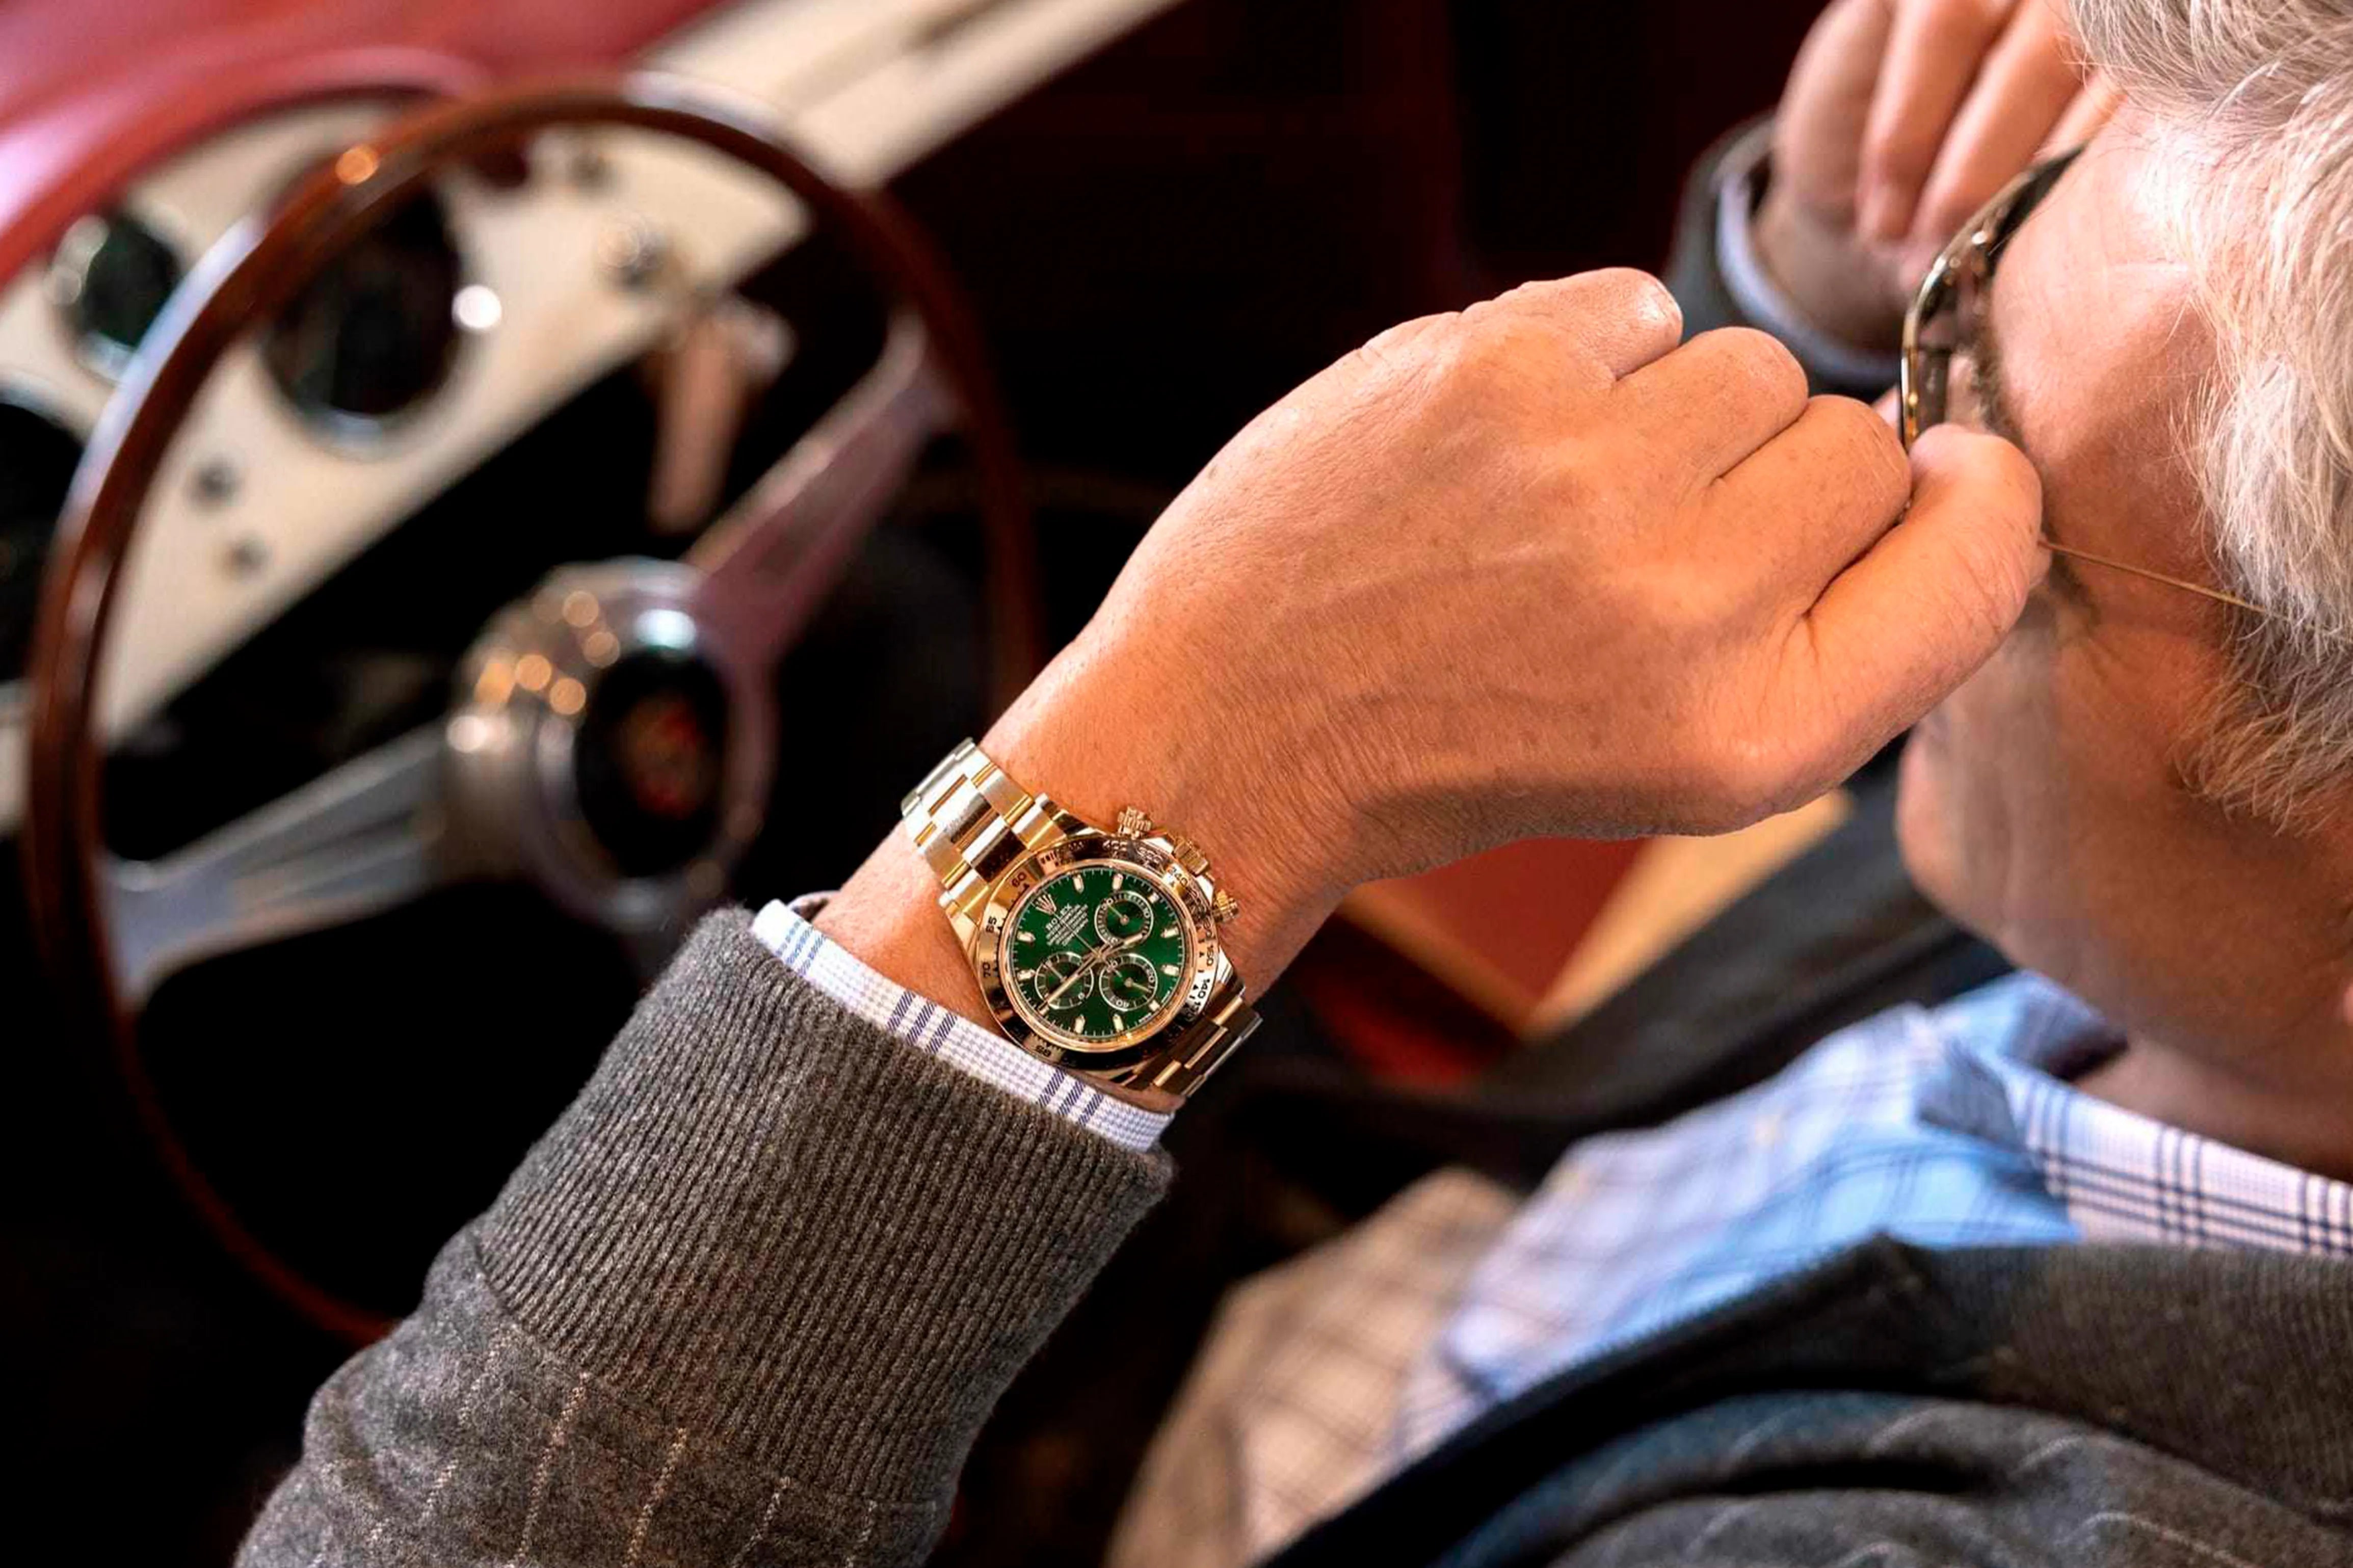 Buy Tissot Watches - Tissot Watches For Men & Women - Kapoor Watch Co.